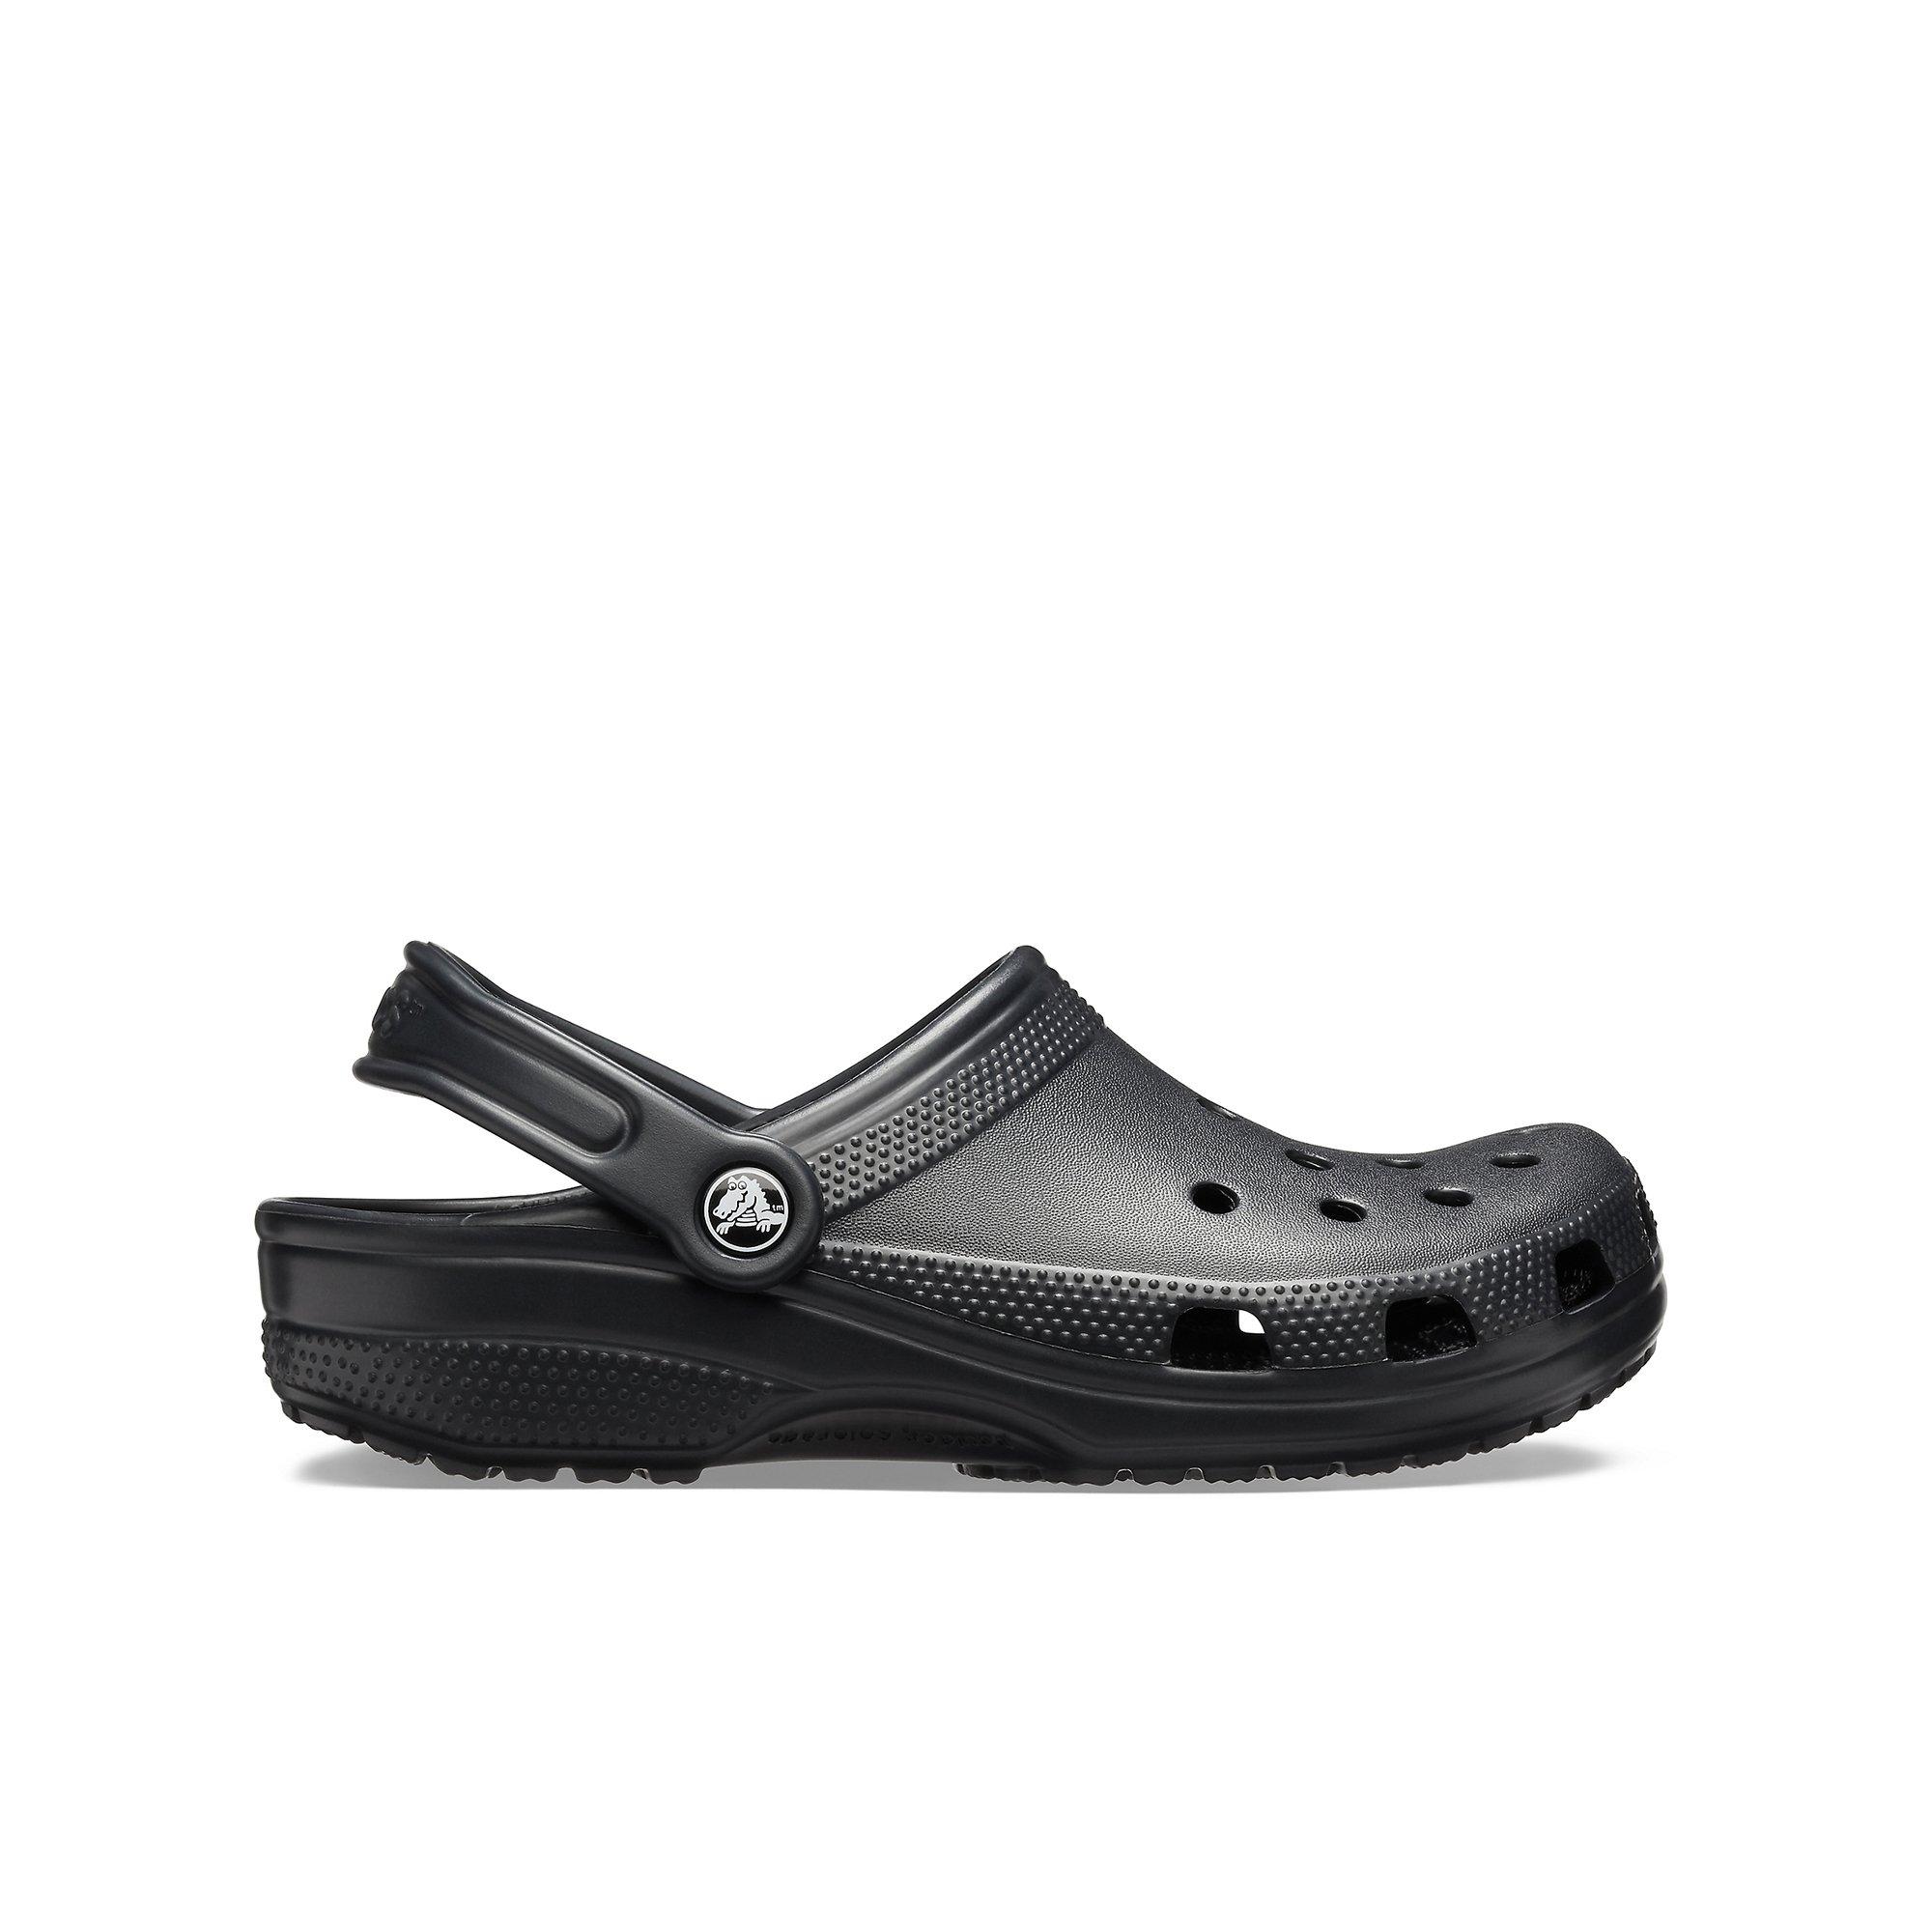 black crocs for women